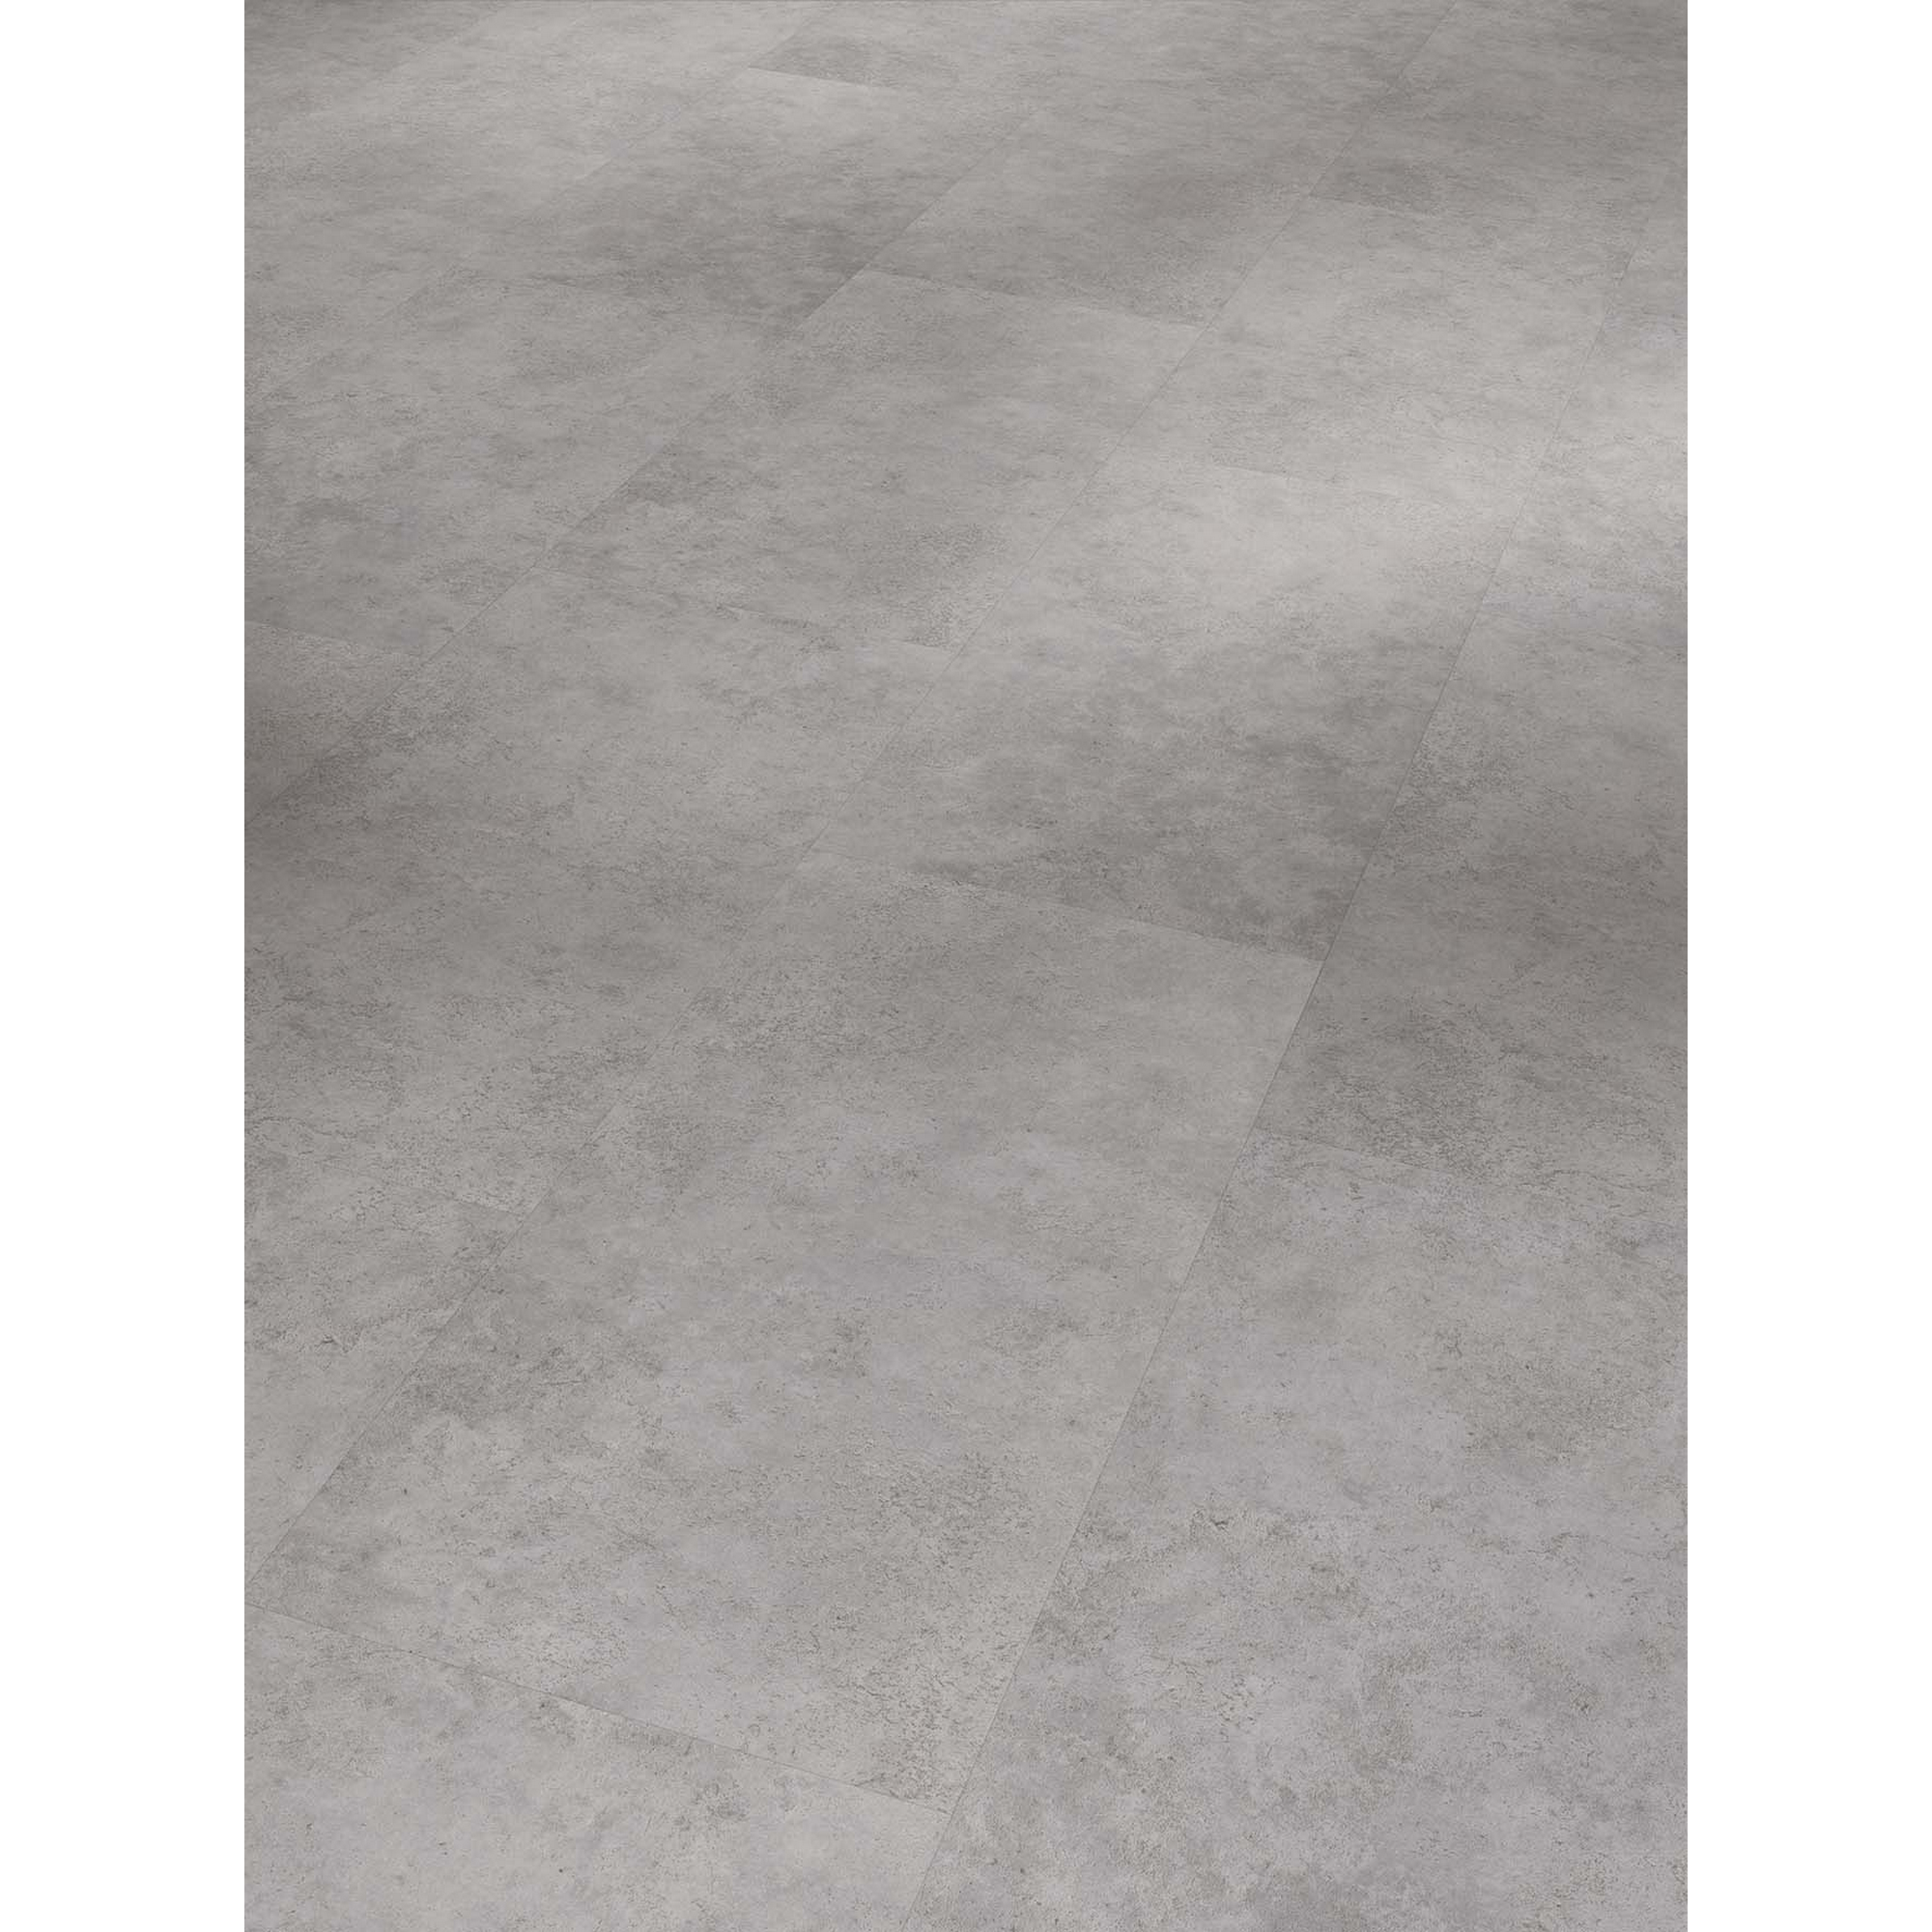 Vinylboden 'Basic 4.3' Beton grau 4,3 mm + product picture